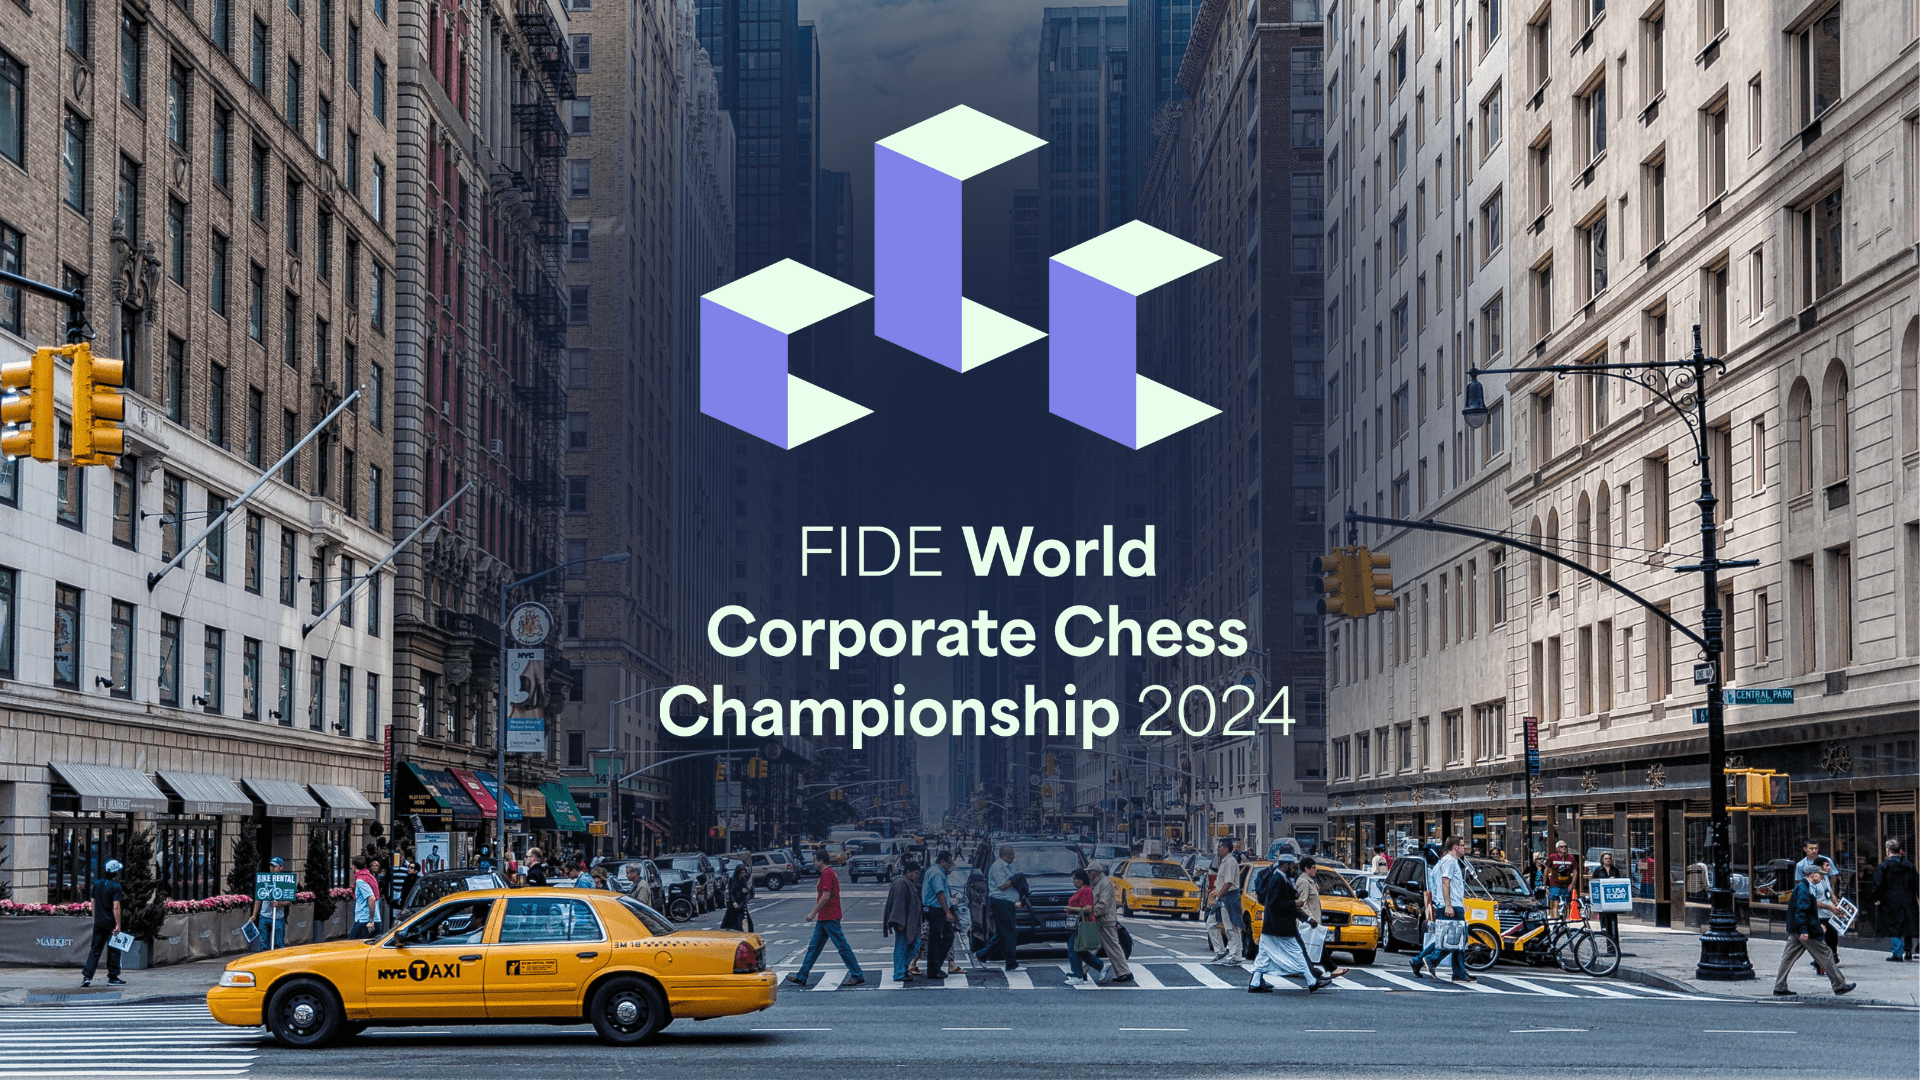 FIDE World Corporate Chess Championship 2024